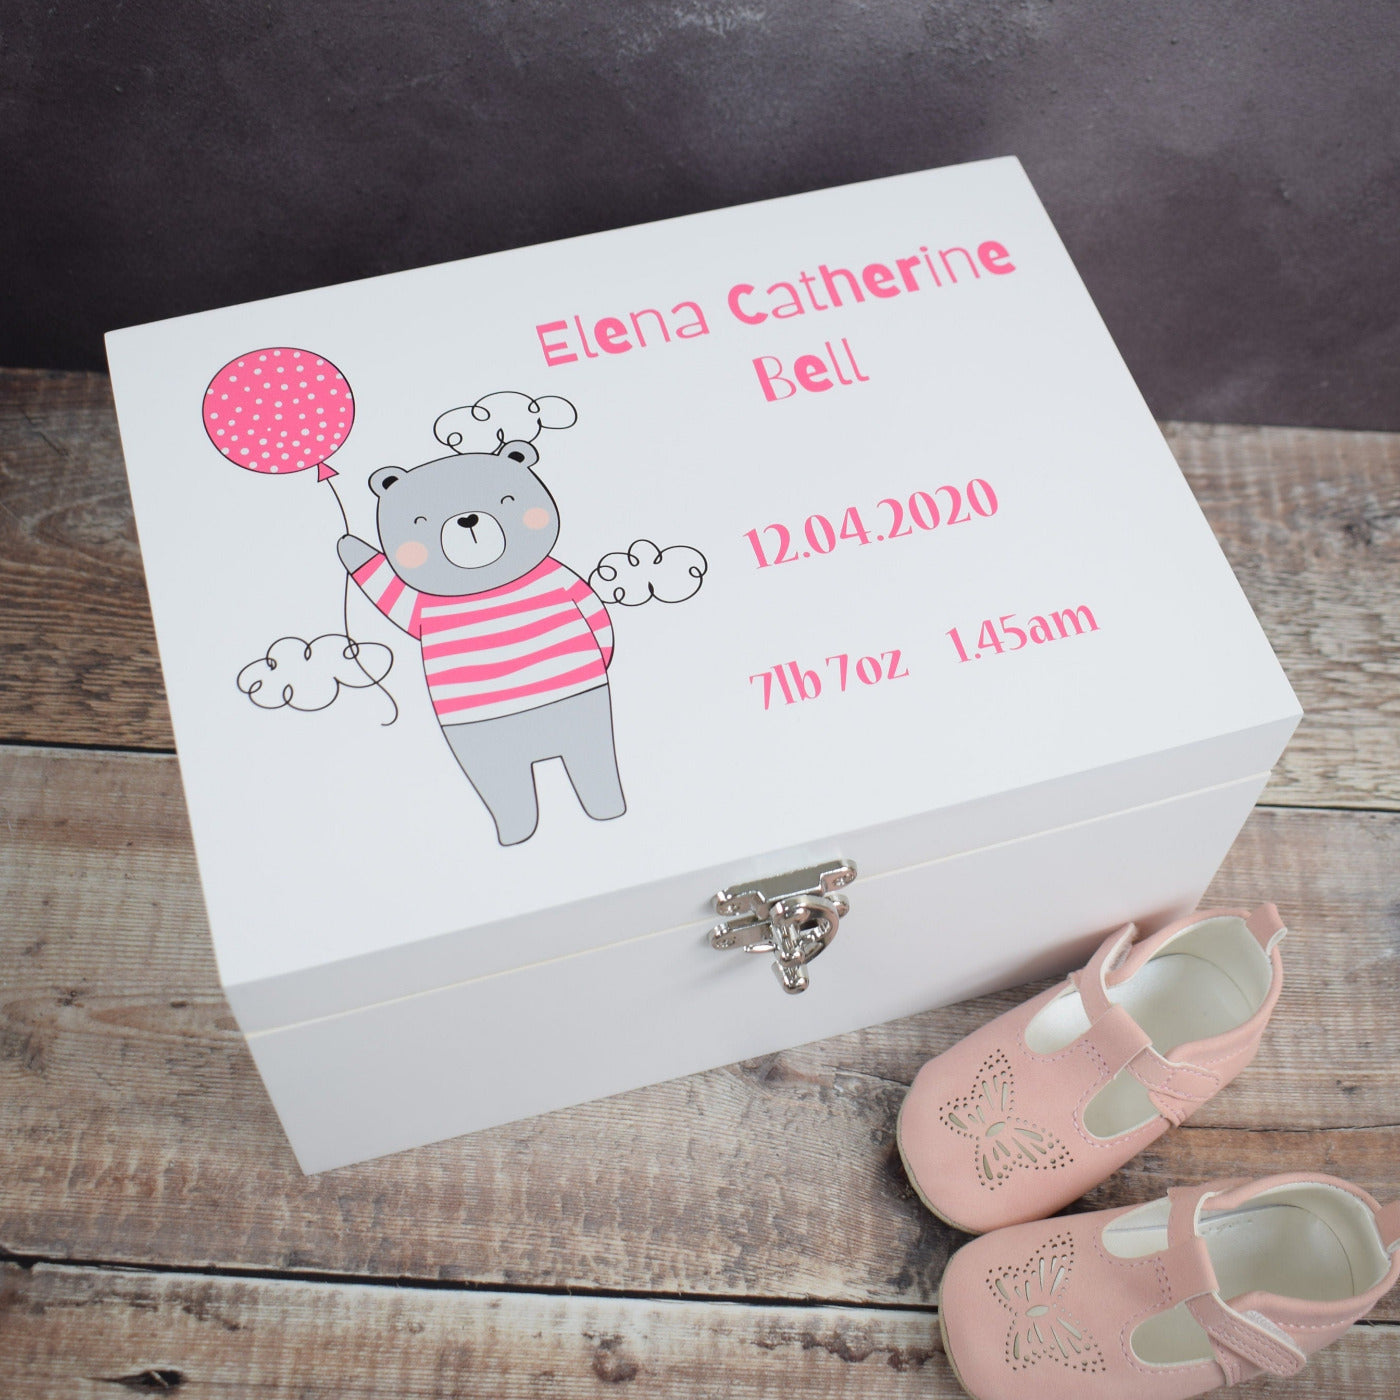 Personalised New Baby Keepsake Box - Newborn Gifts, Memory Boxes, New Baby Gifts, Gifts For Baby, New Mothers, Christening Gift - Balloon